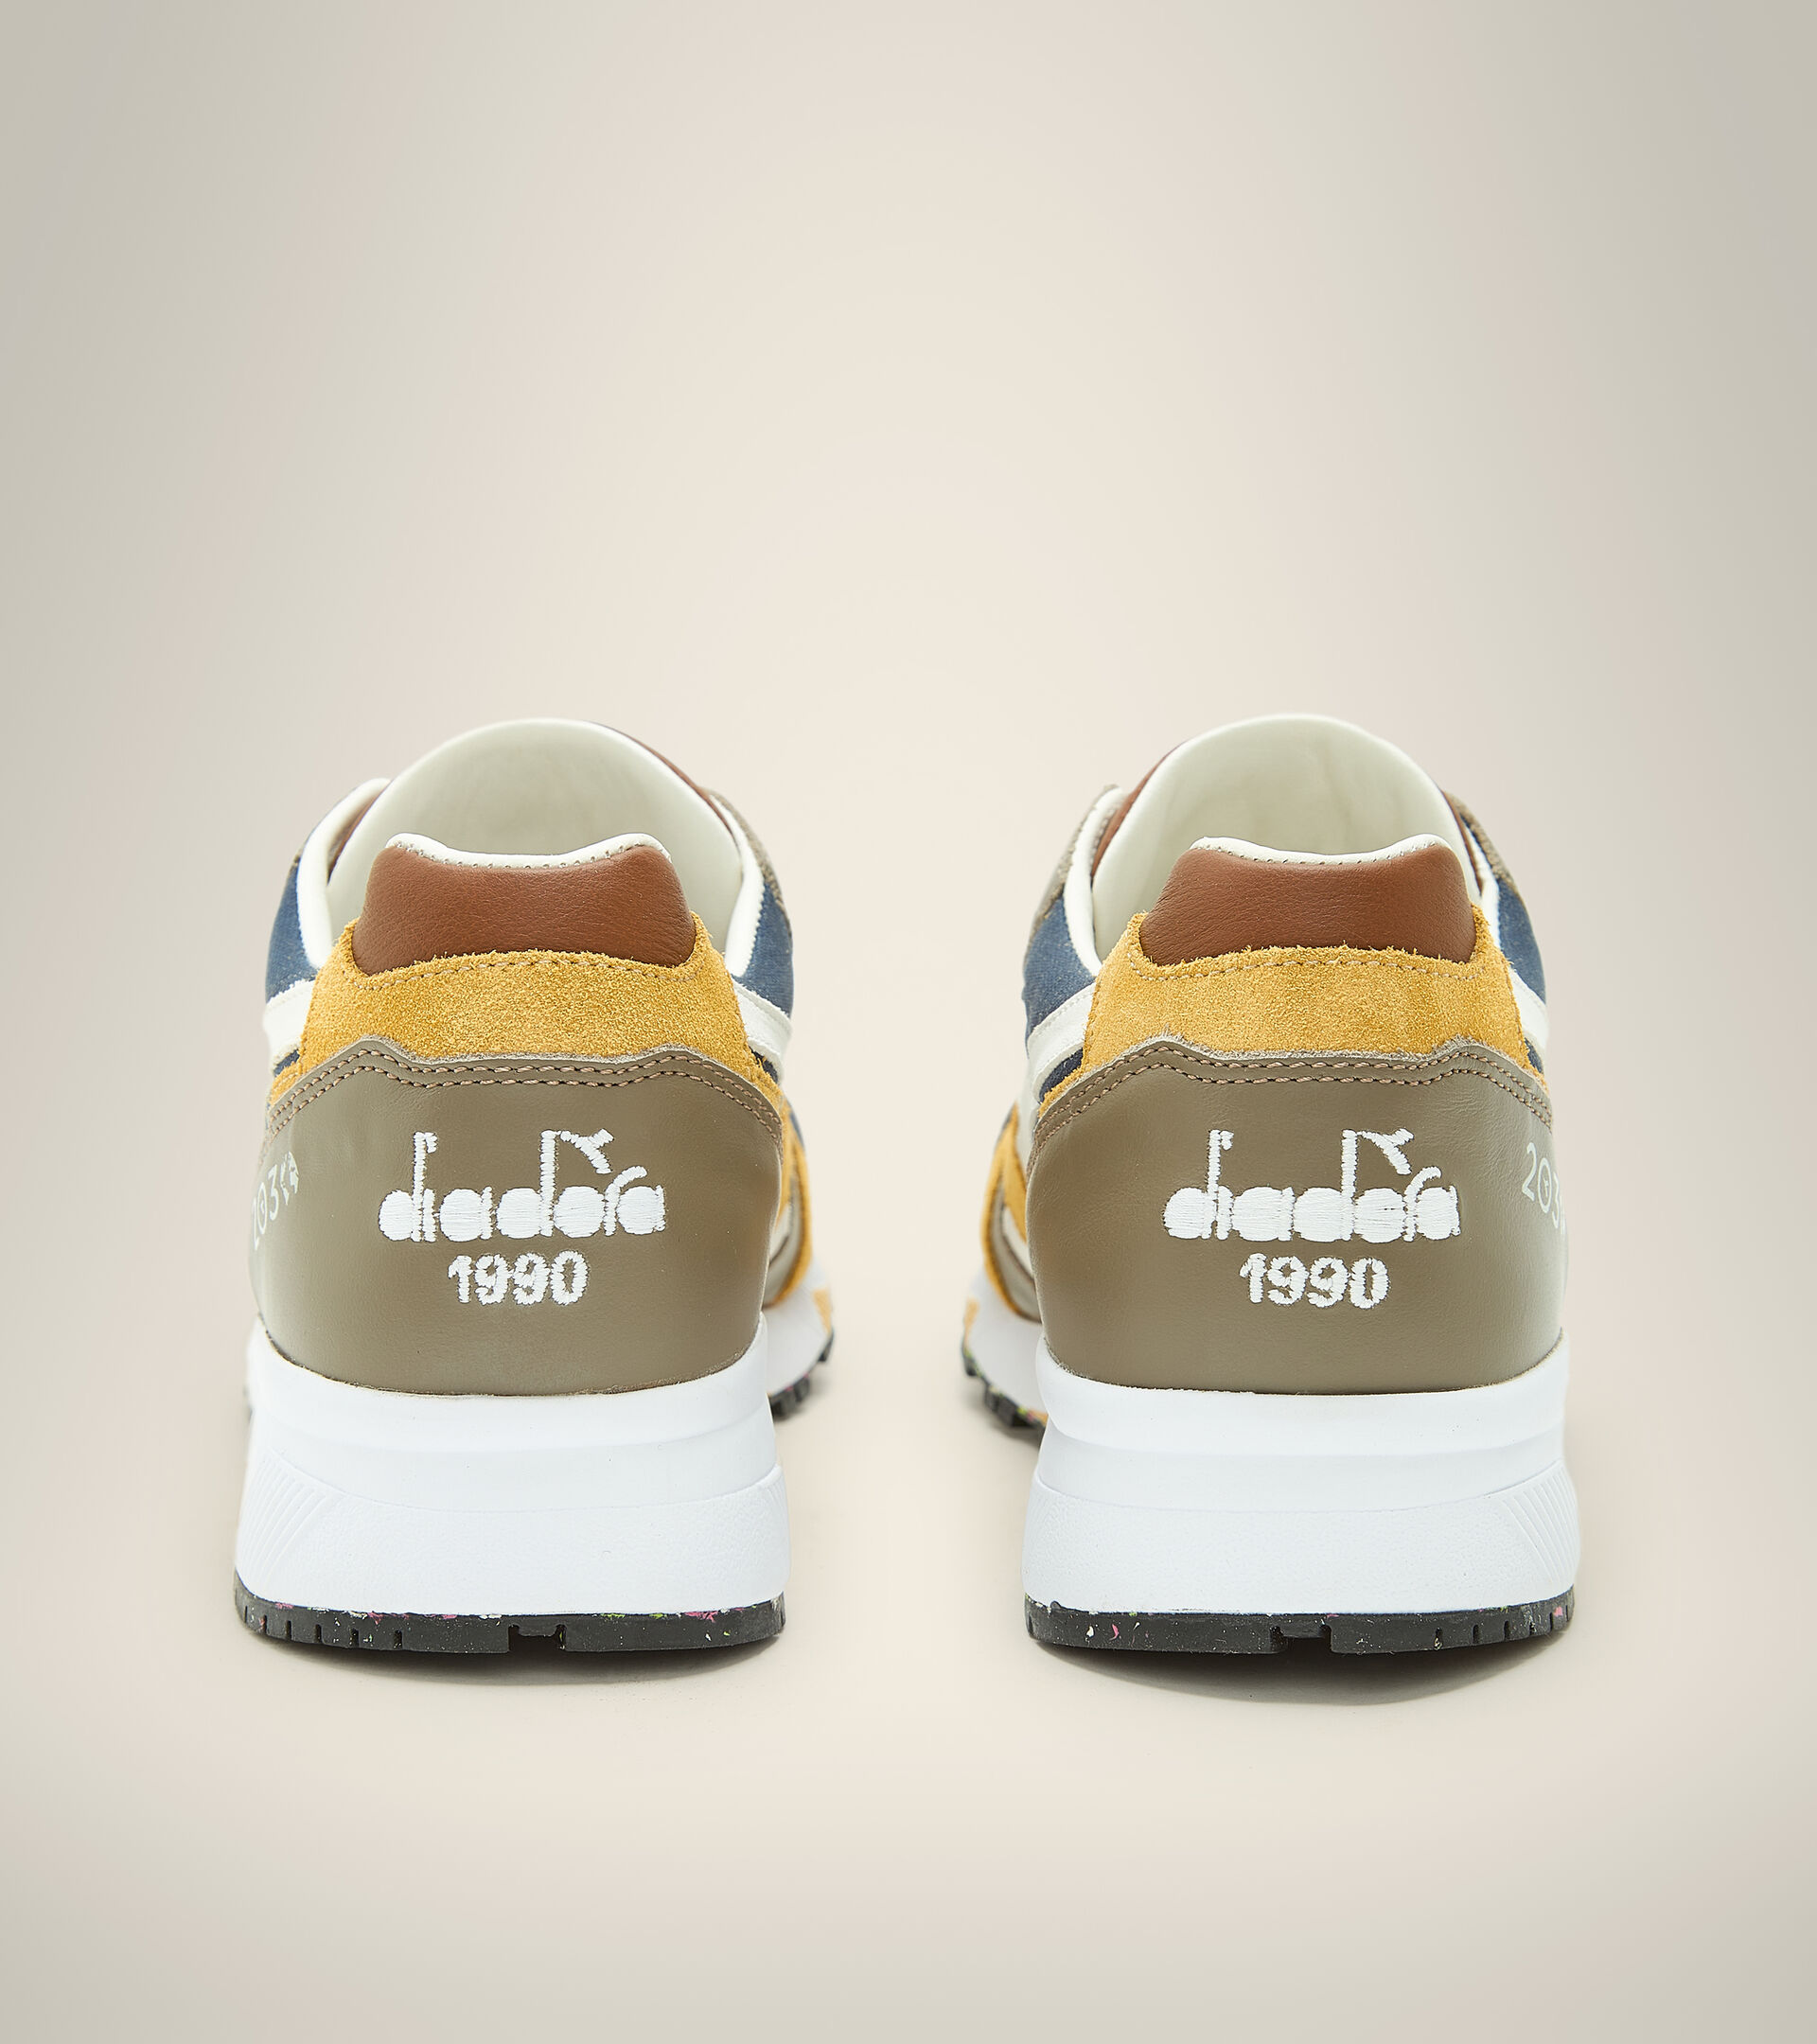 Made in Italy Heritage Shoe - Men N9000 2030 ITALIA BRUSHED NICKEL - Diadora